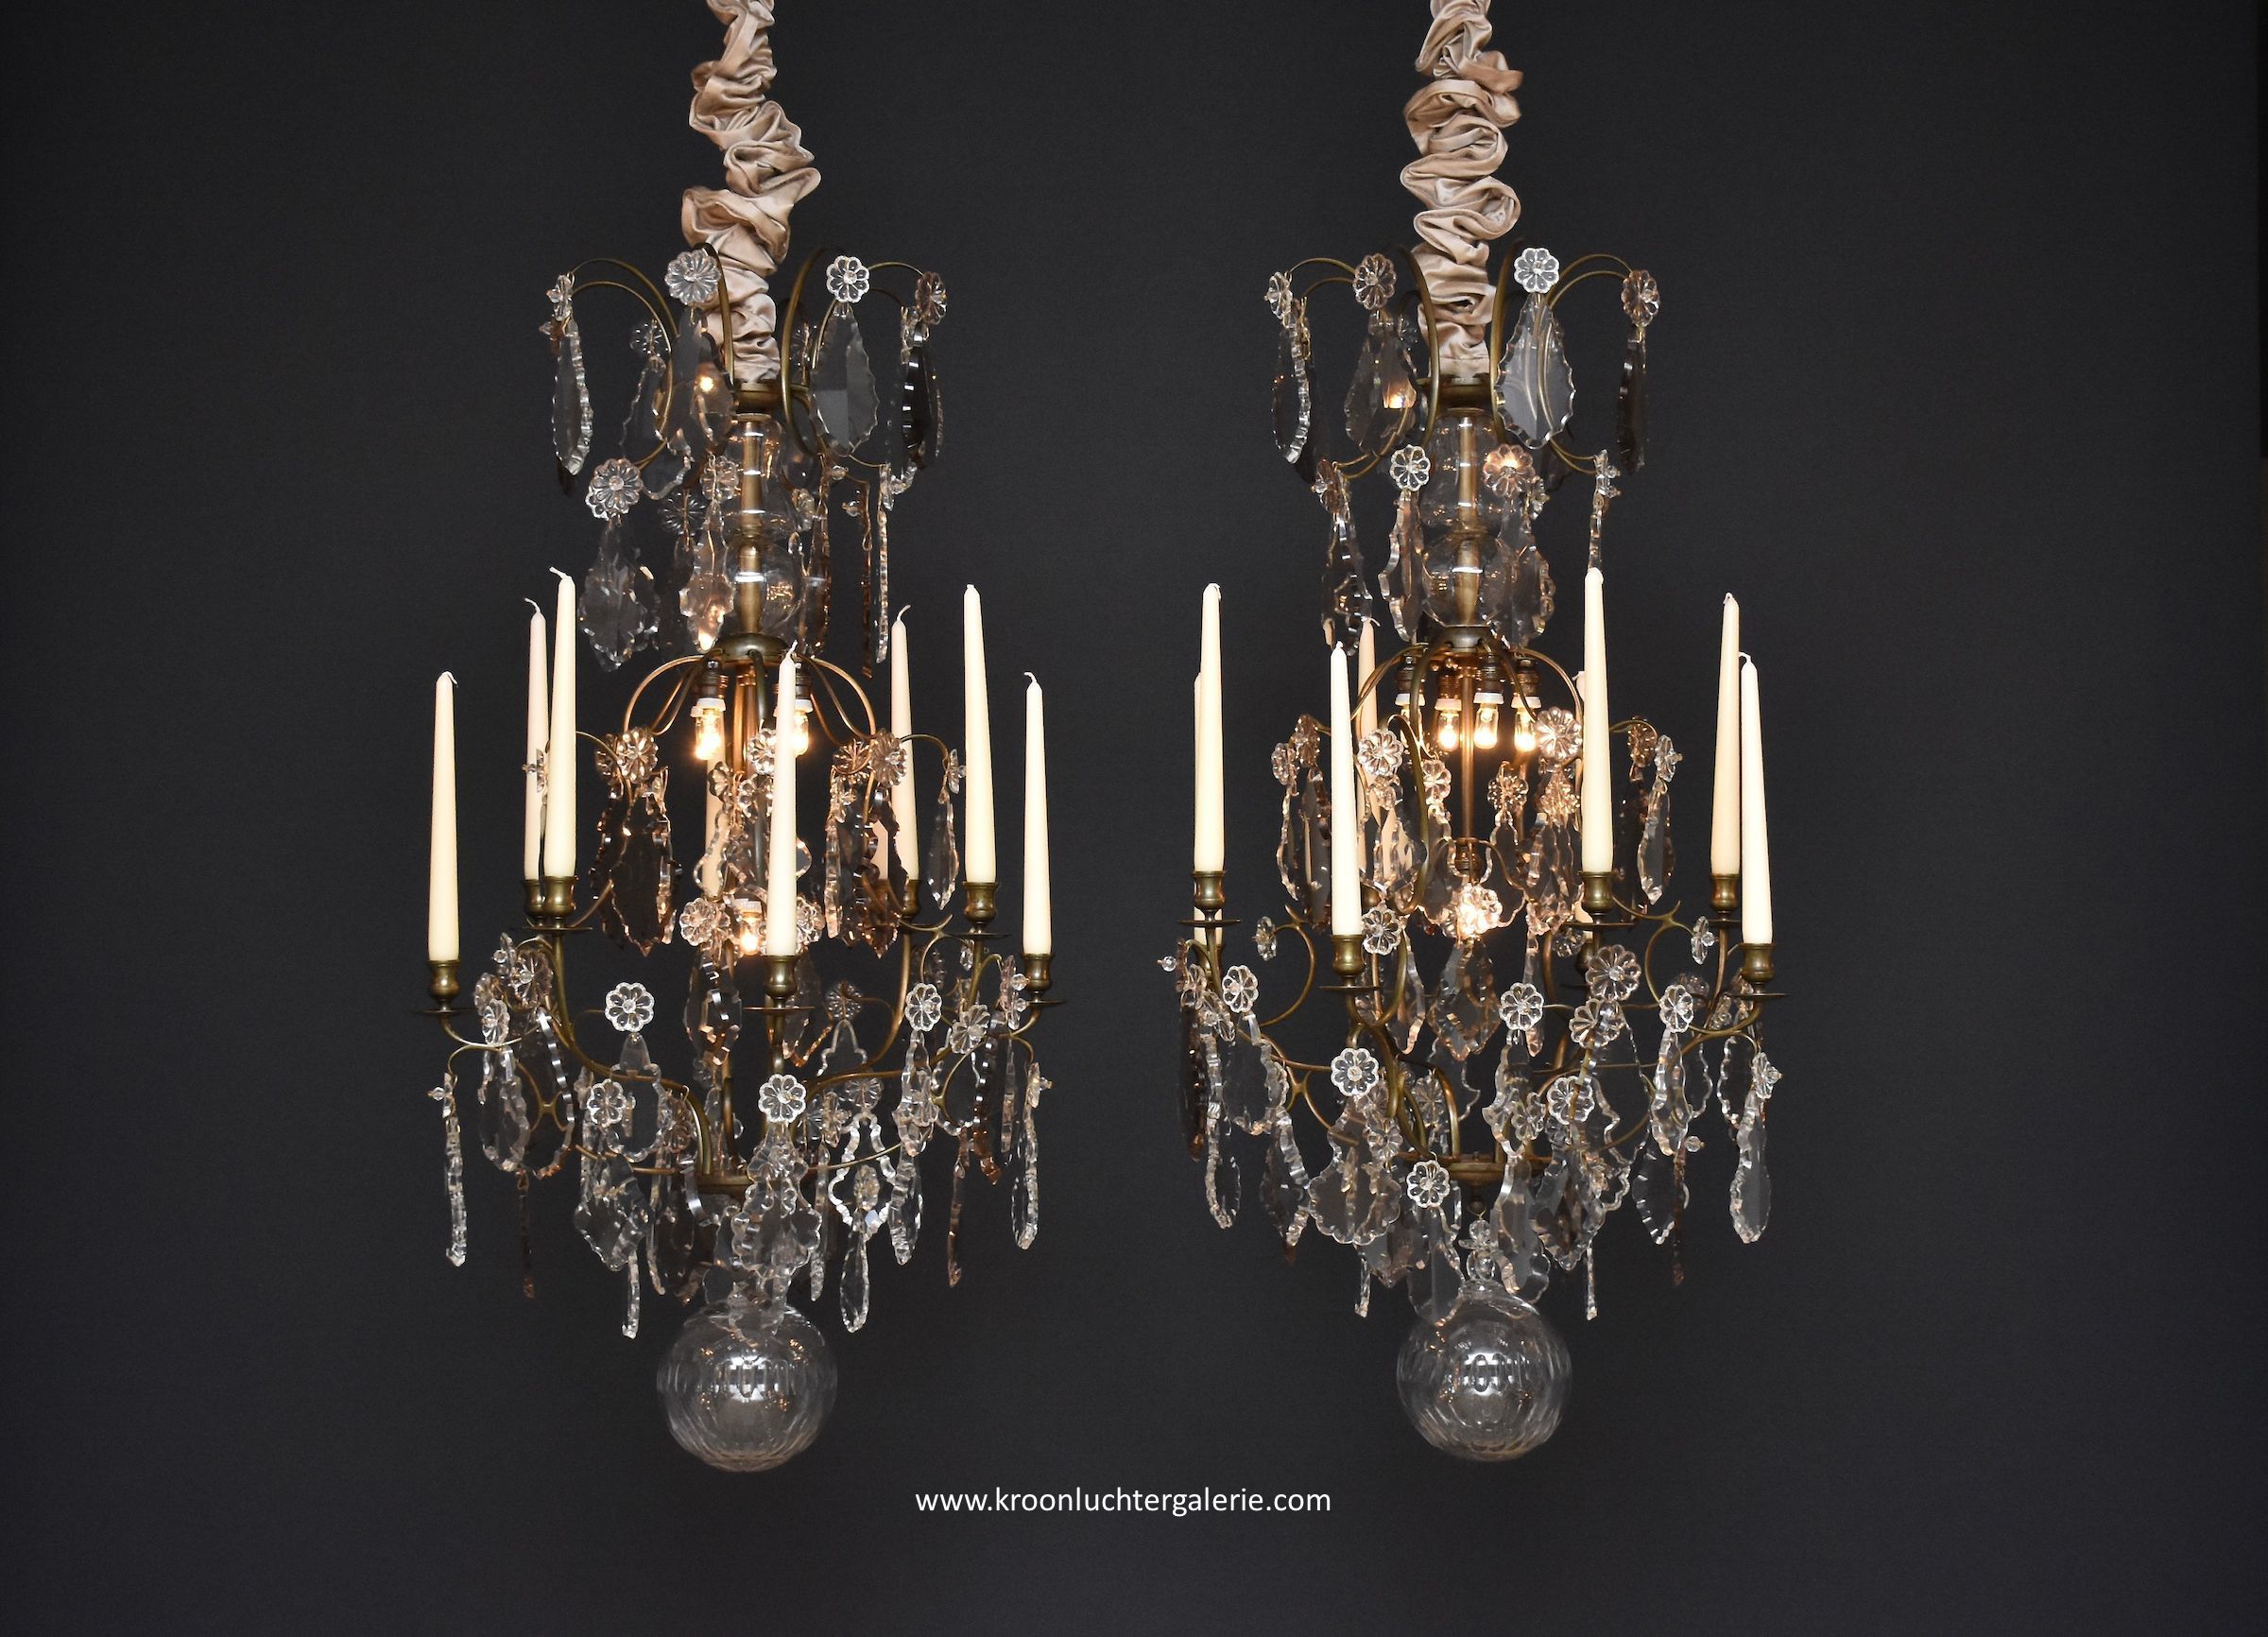 A pair of North-European Rococo chandeliers